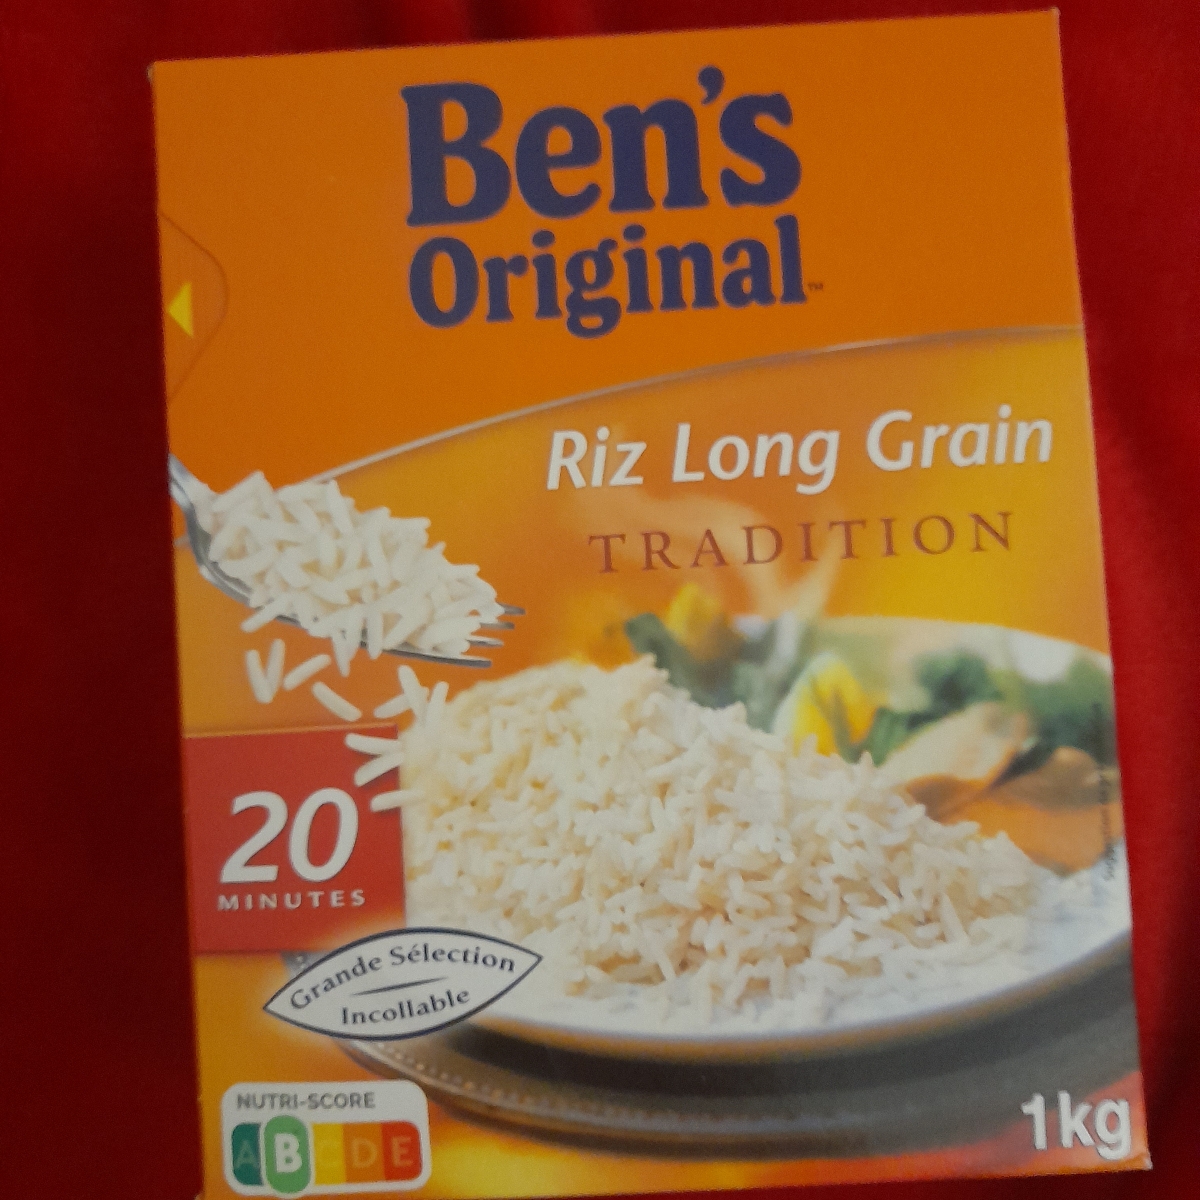 Ben's Original Riz Long Grain Tradition Reviews